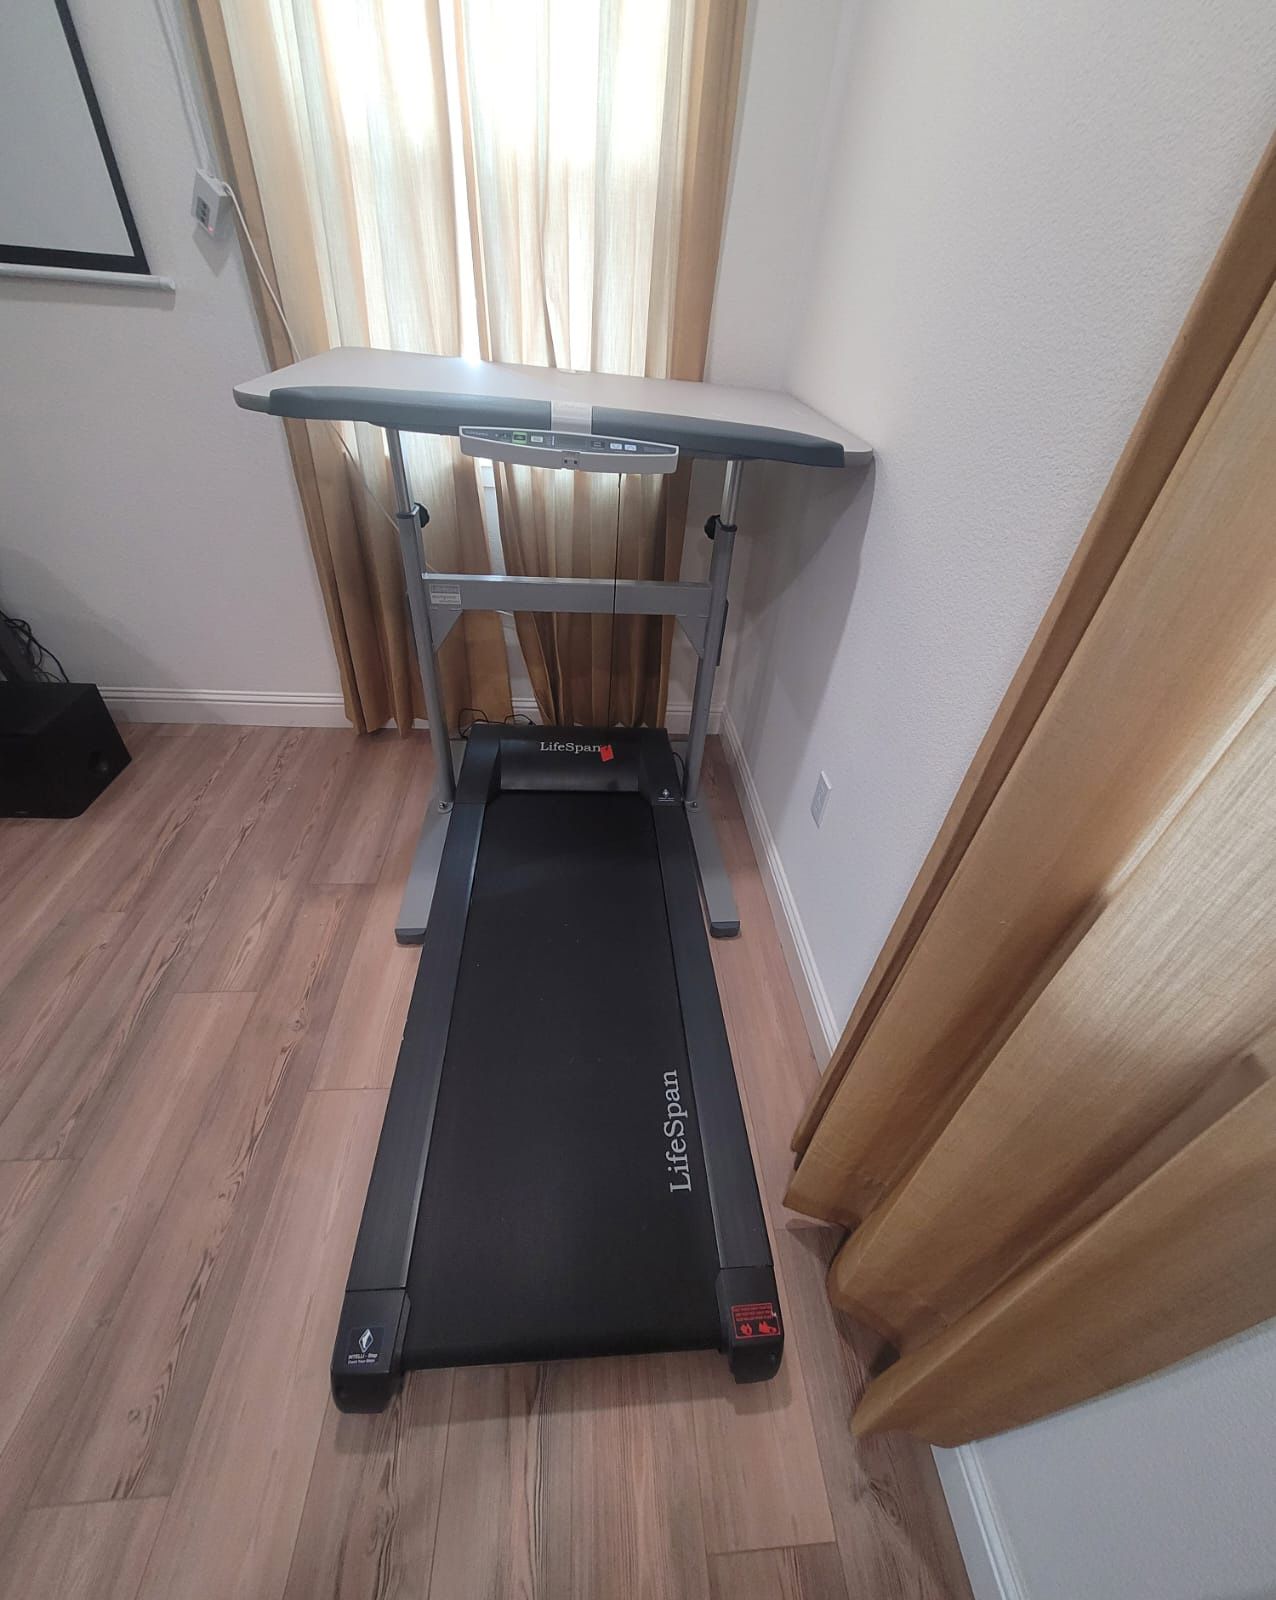 Life Span Standing Desk Treadmill